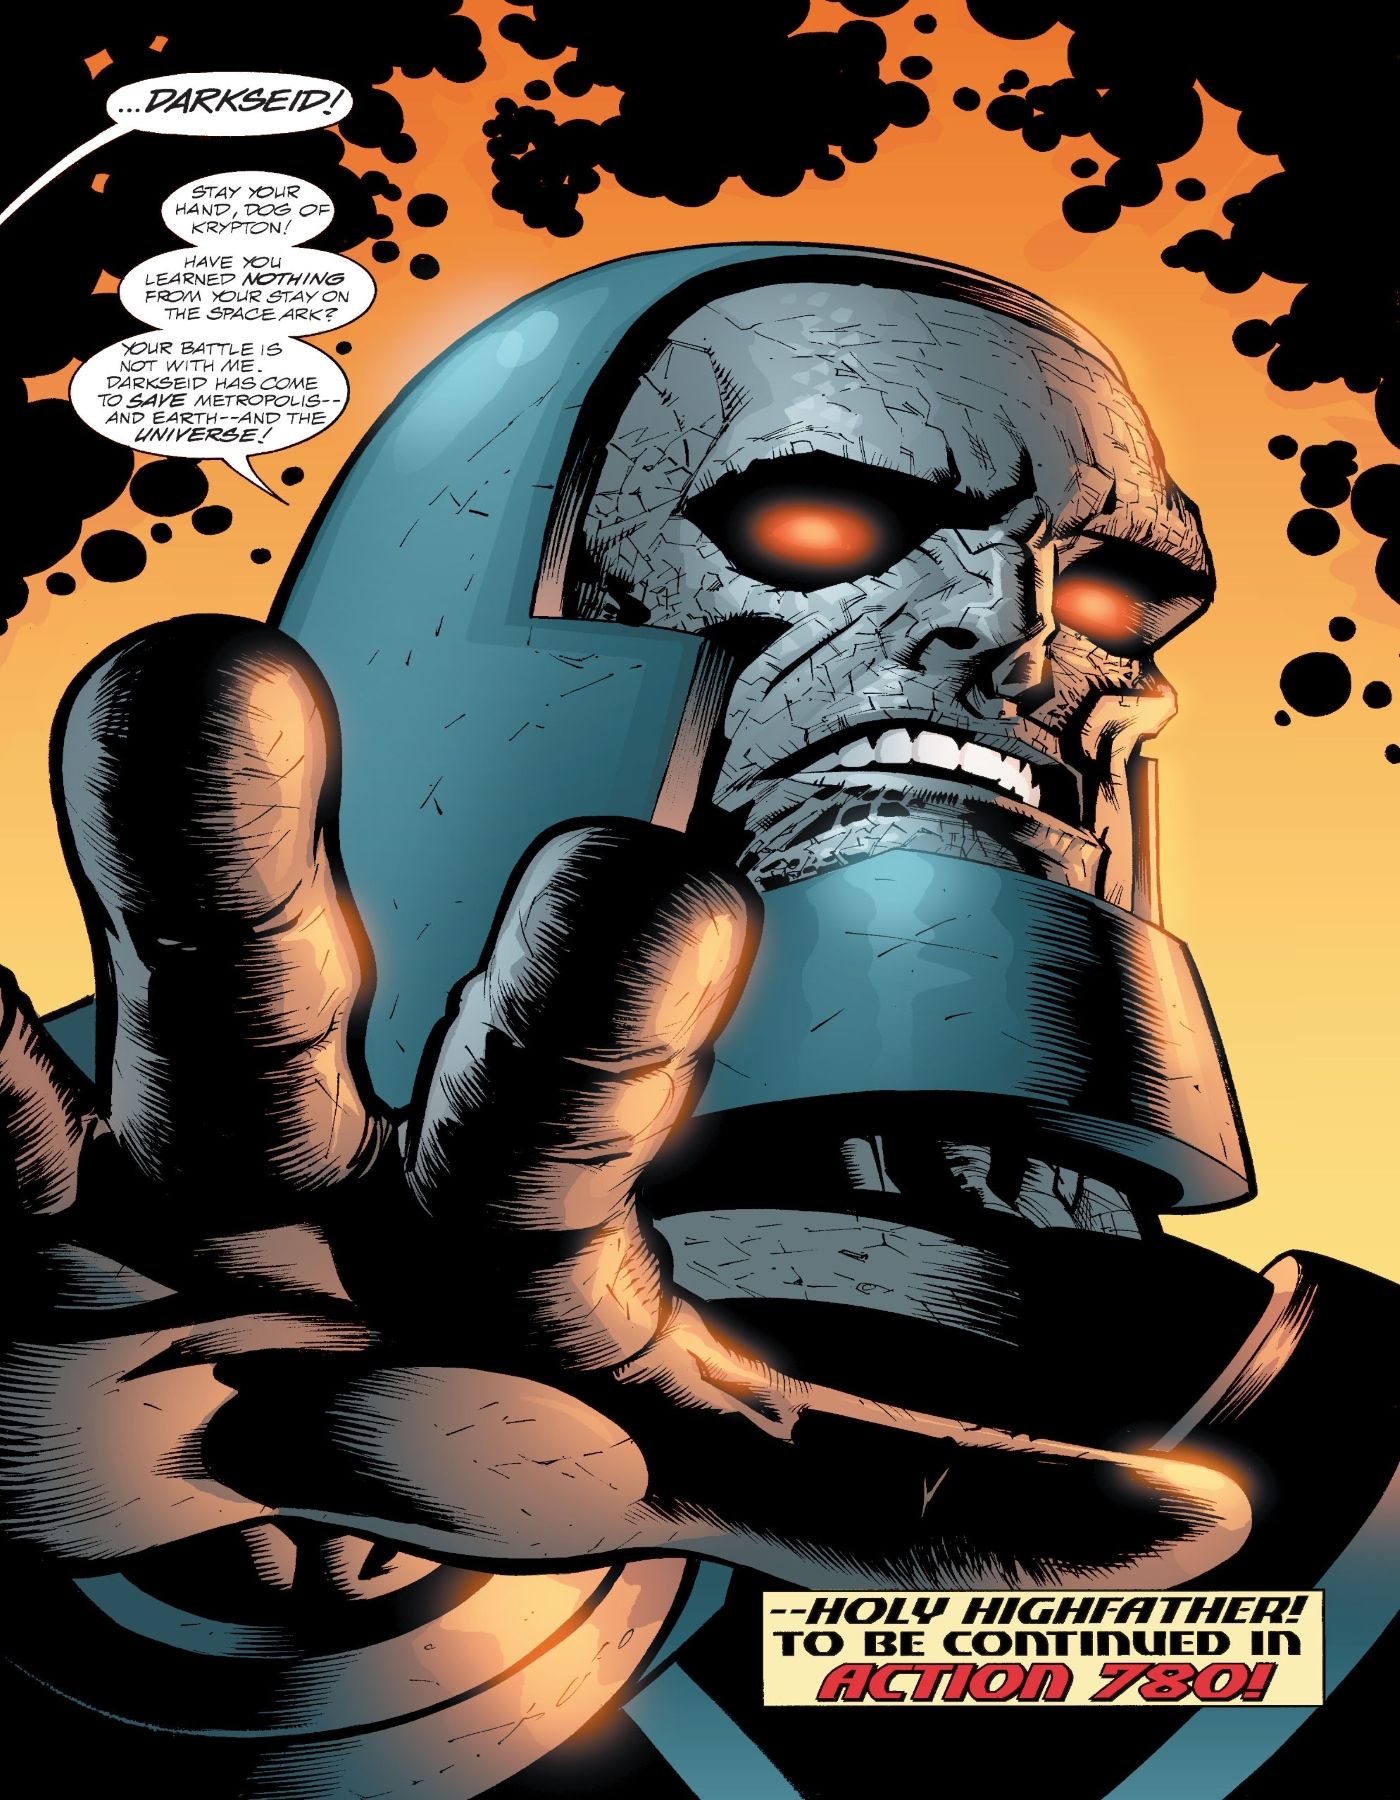 Darkseid is the savior of Metropolis